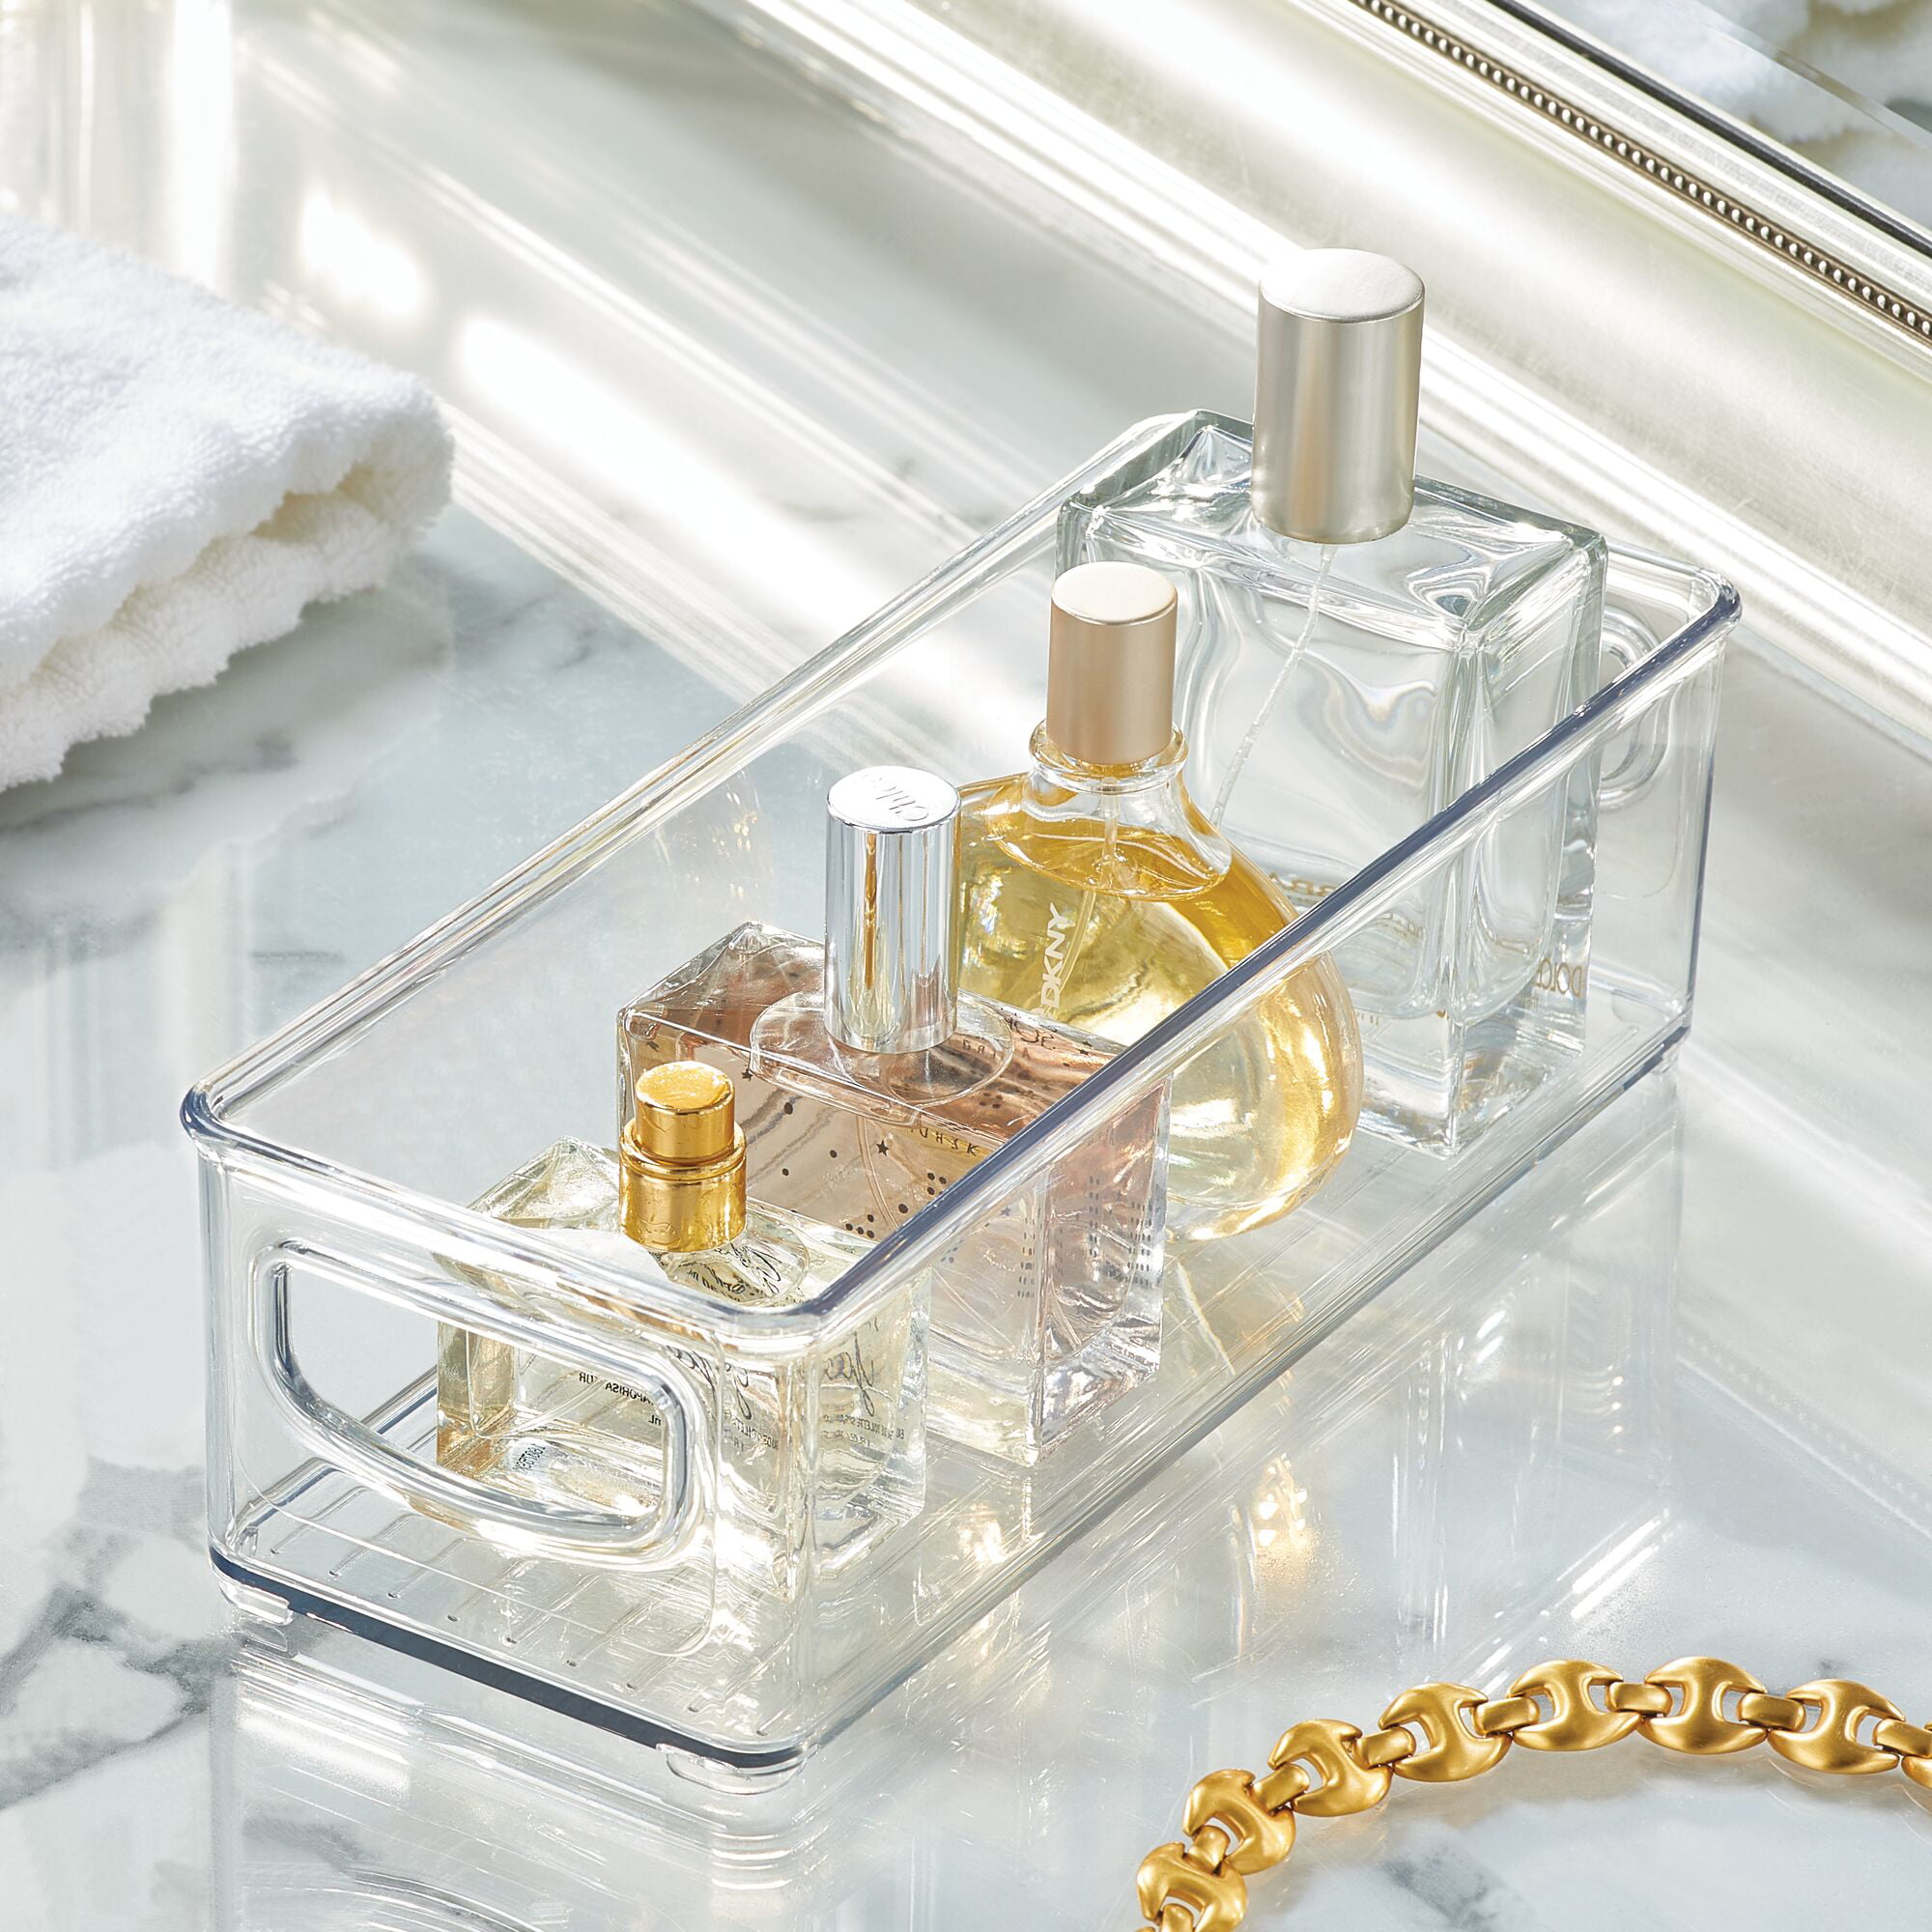 Bathroom Plastic 9 Slot Mixed Cosmetic Organizer Clear - Brightroom™